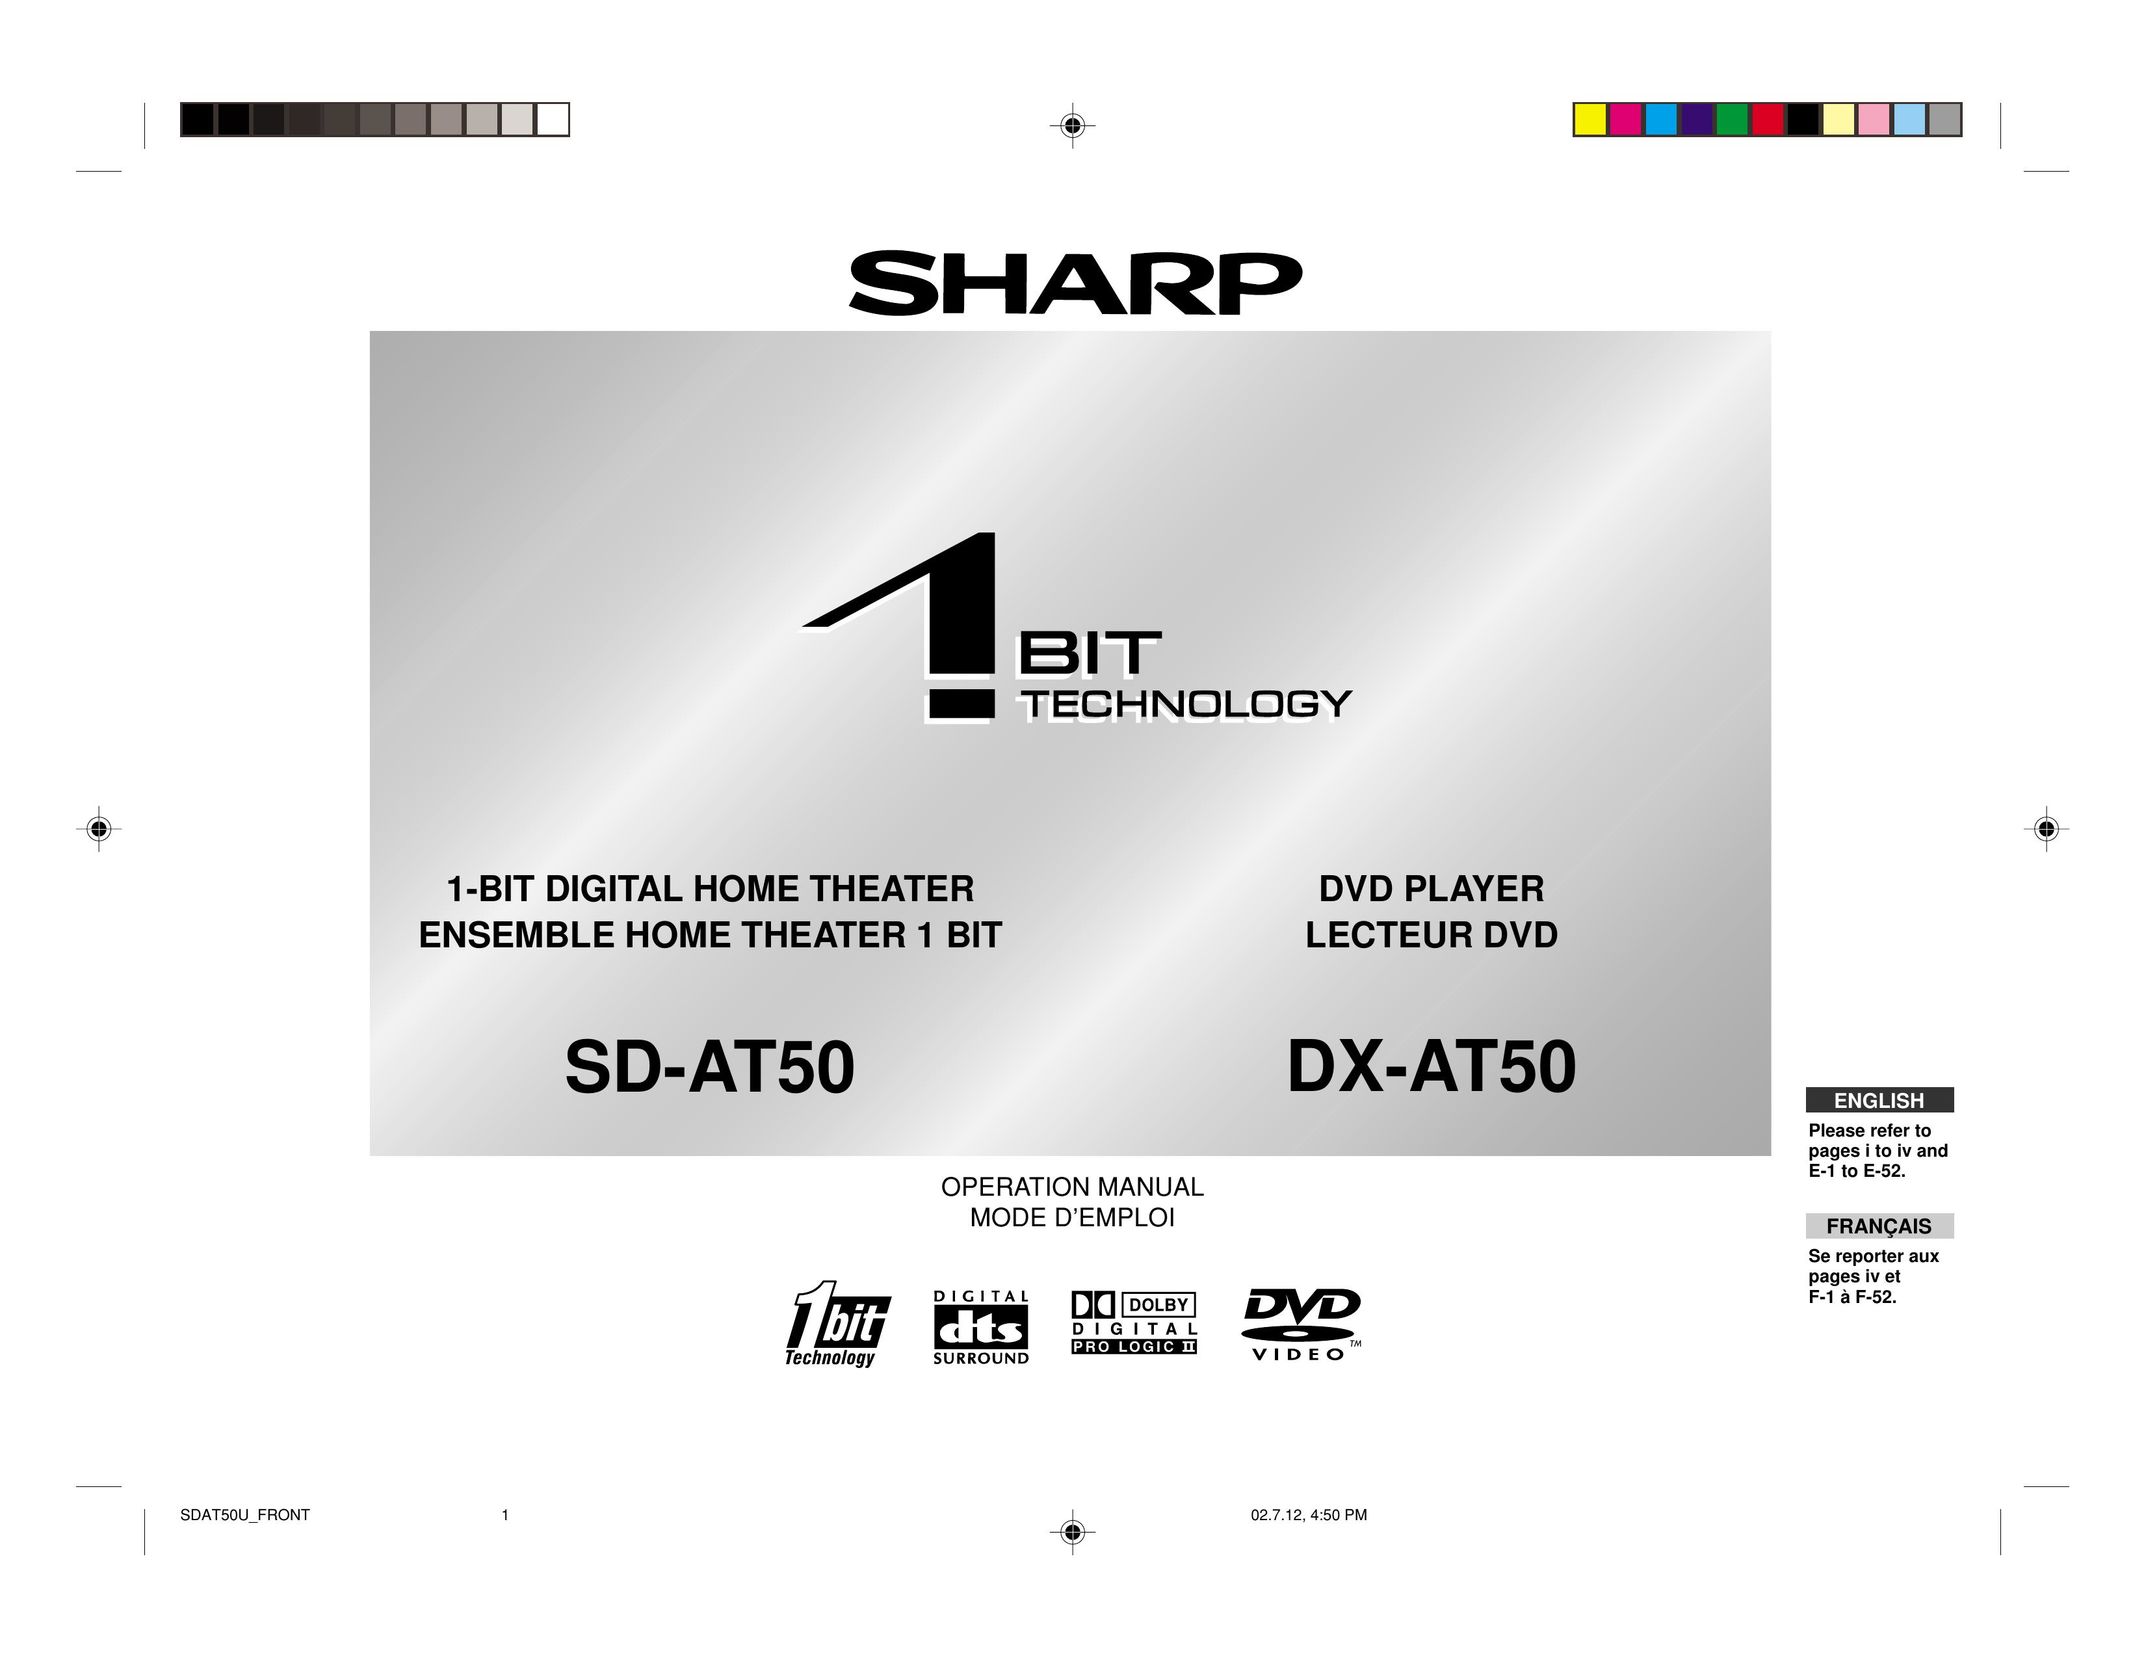 Sharp DX-AT50 DVD Player User Manual